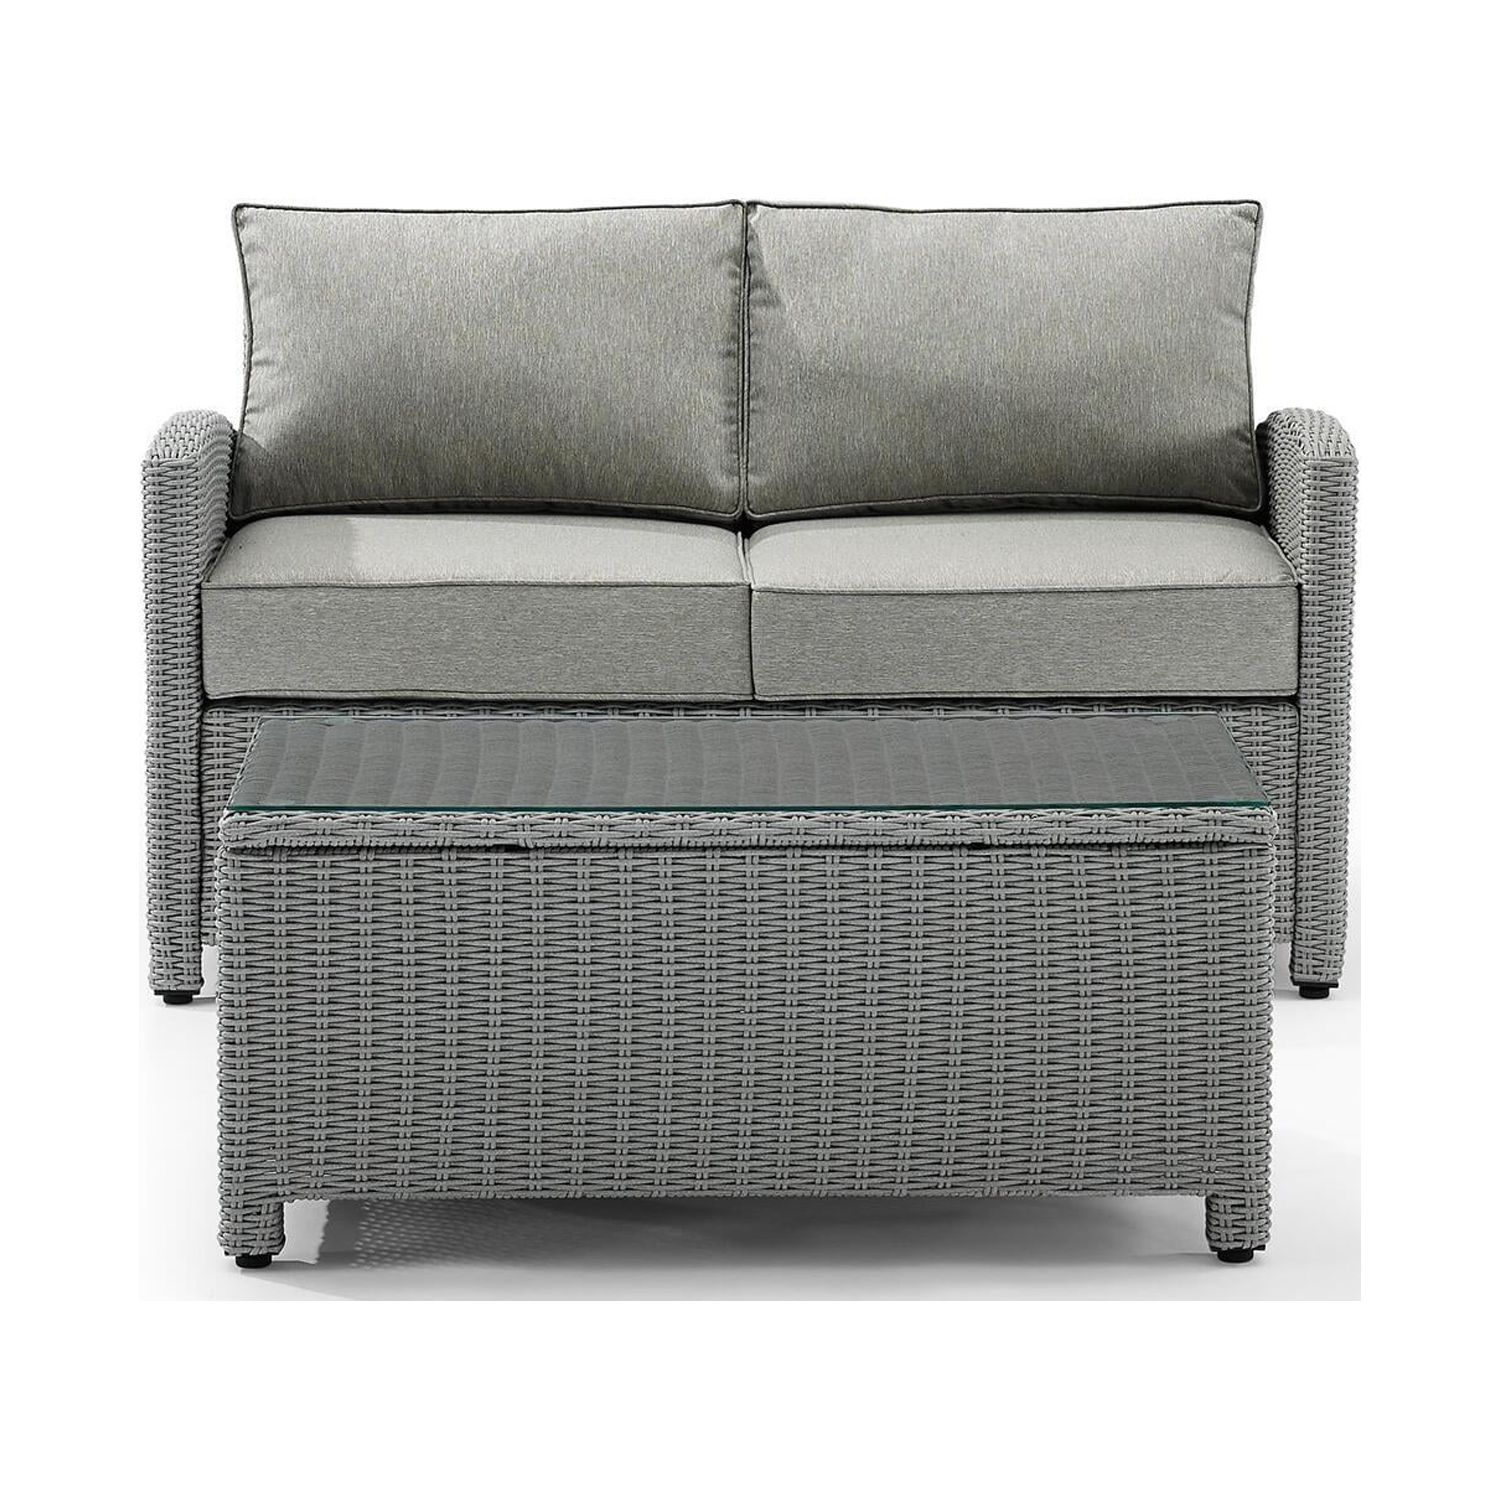 Crosley Bradenton 2 Piece Wicker Patio Sofa Set in Gray - image 1 of 7